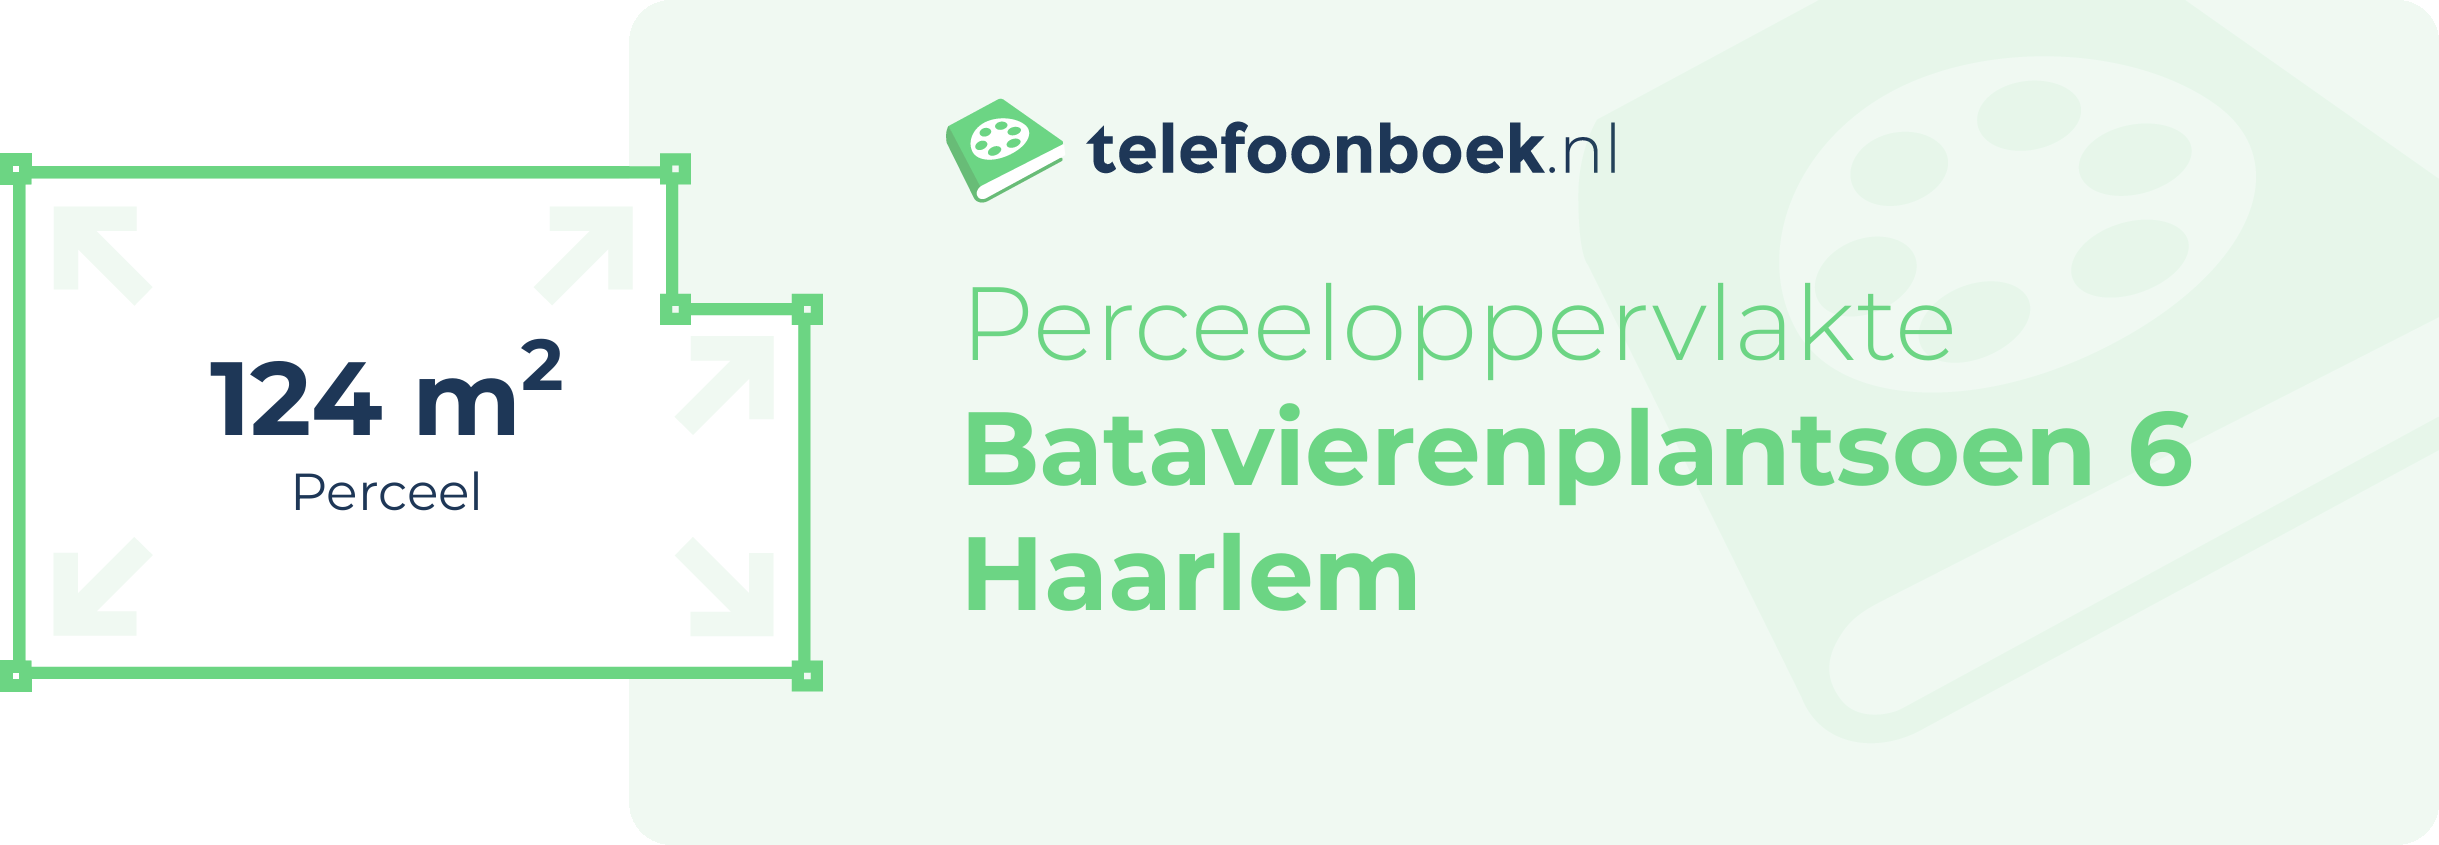 Perceeloppervlakte Batavierenplantsoen 6 Haarlem